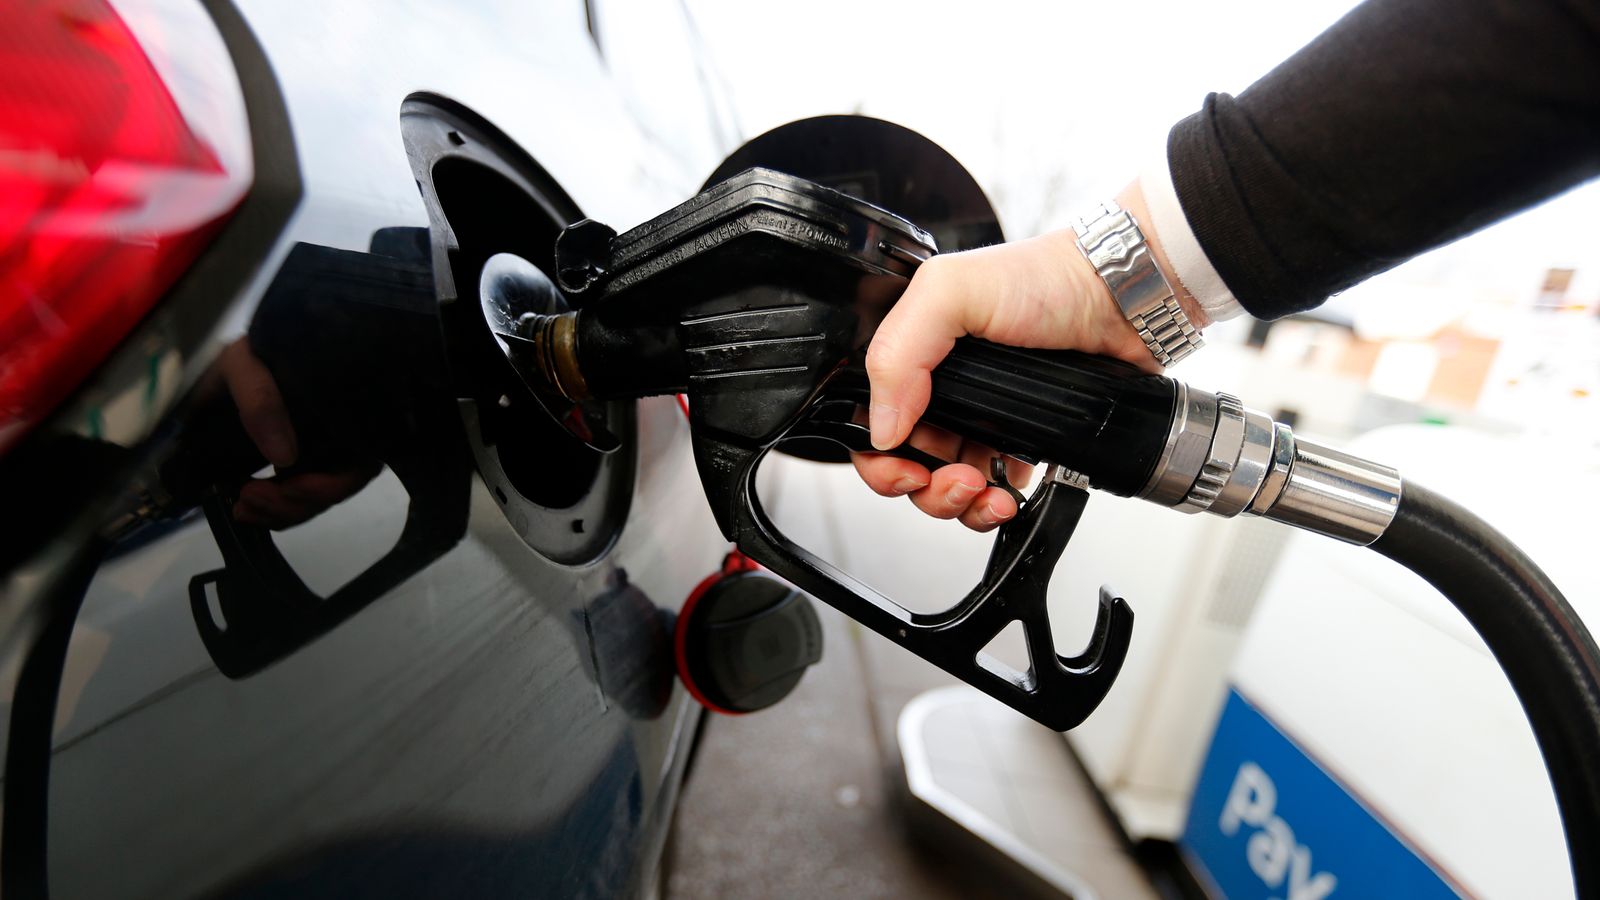 UK has most expensive diesel in Europe as retailer margins remain above average - RAC says